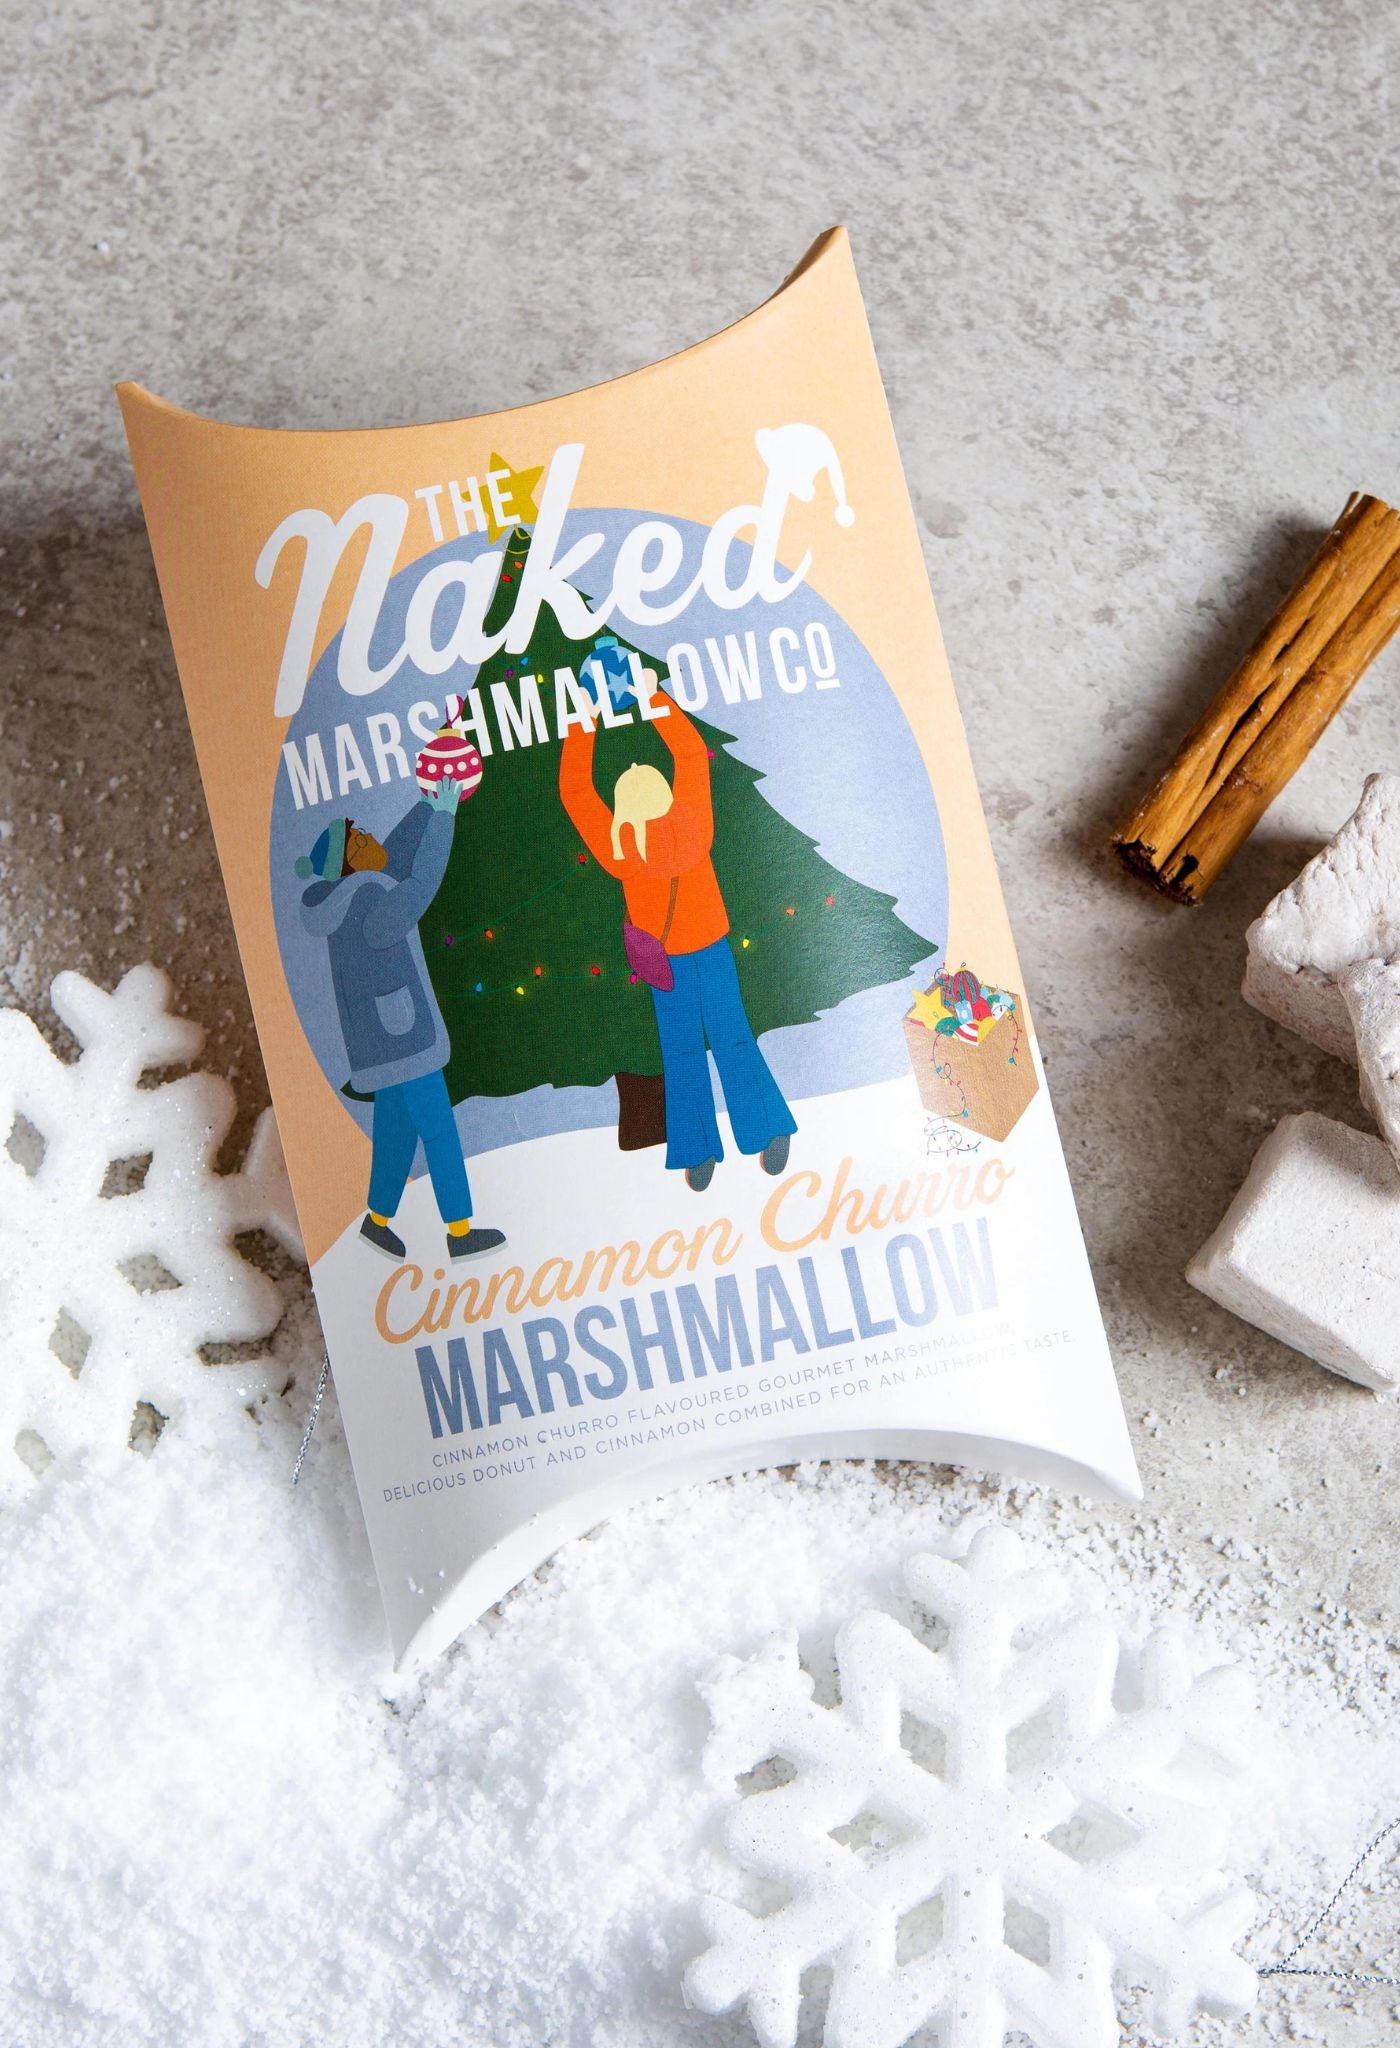 Cinnamon Churro Festive Gourmet Marshmallows